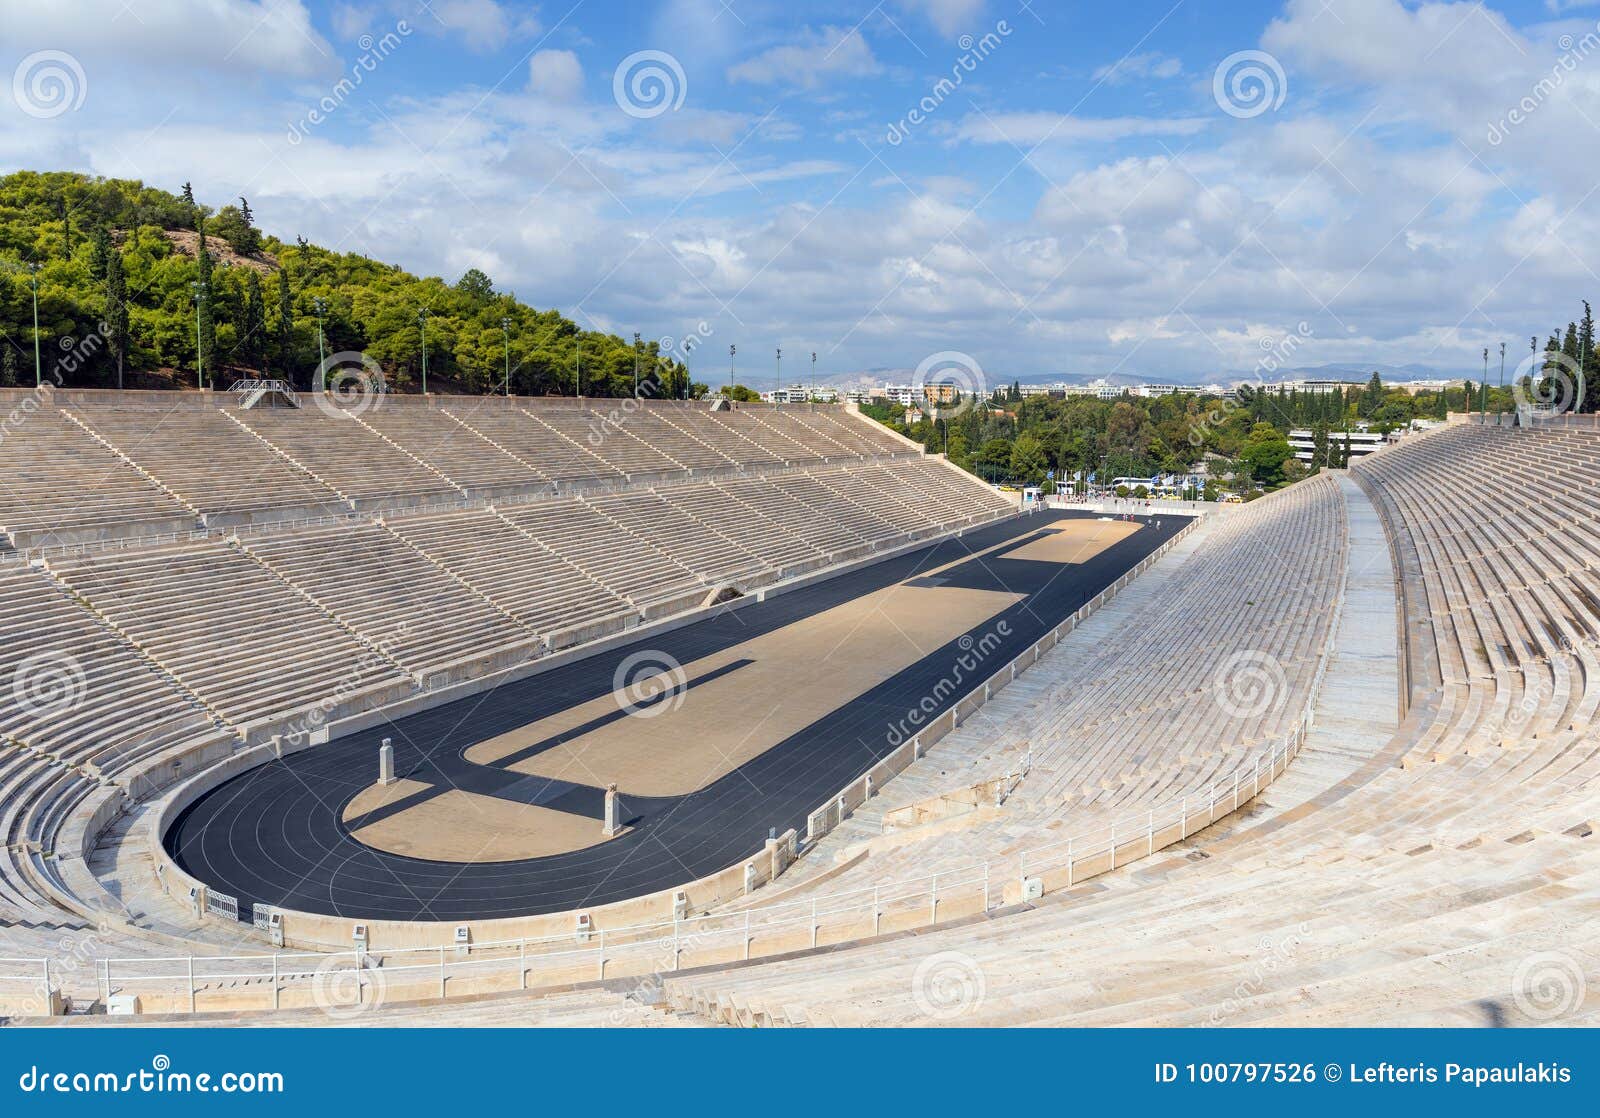 Greece olympics